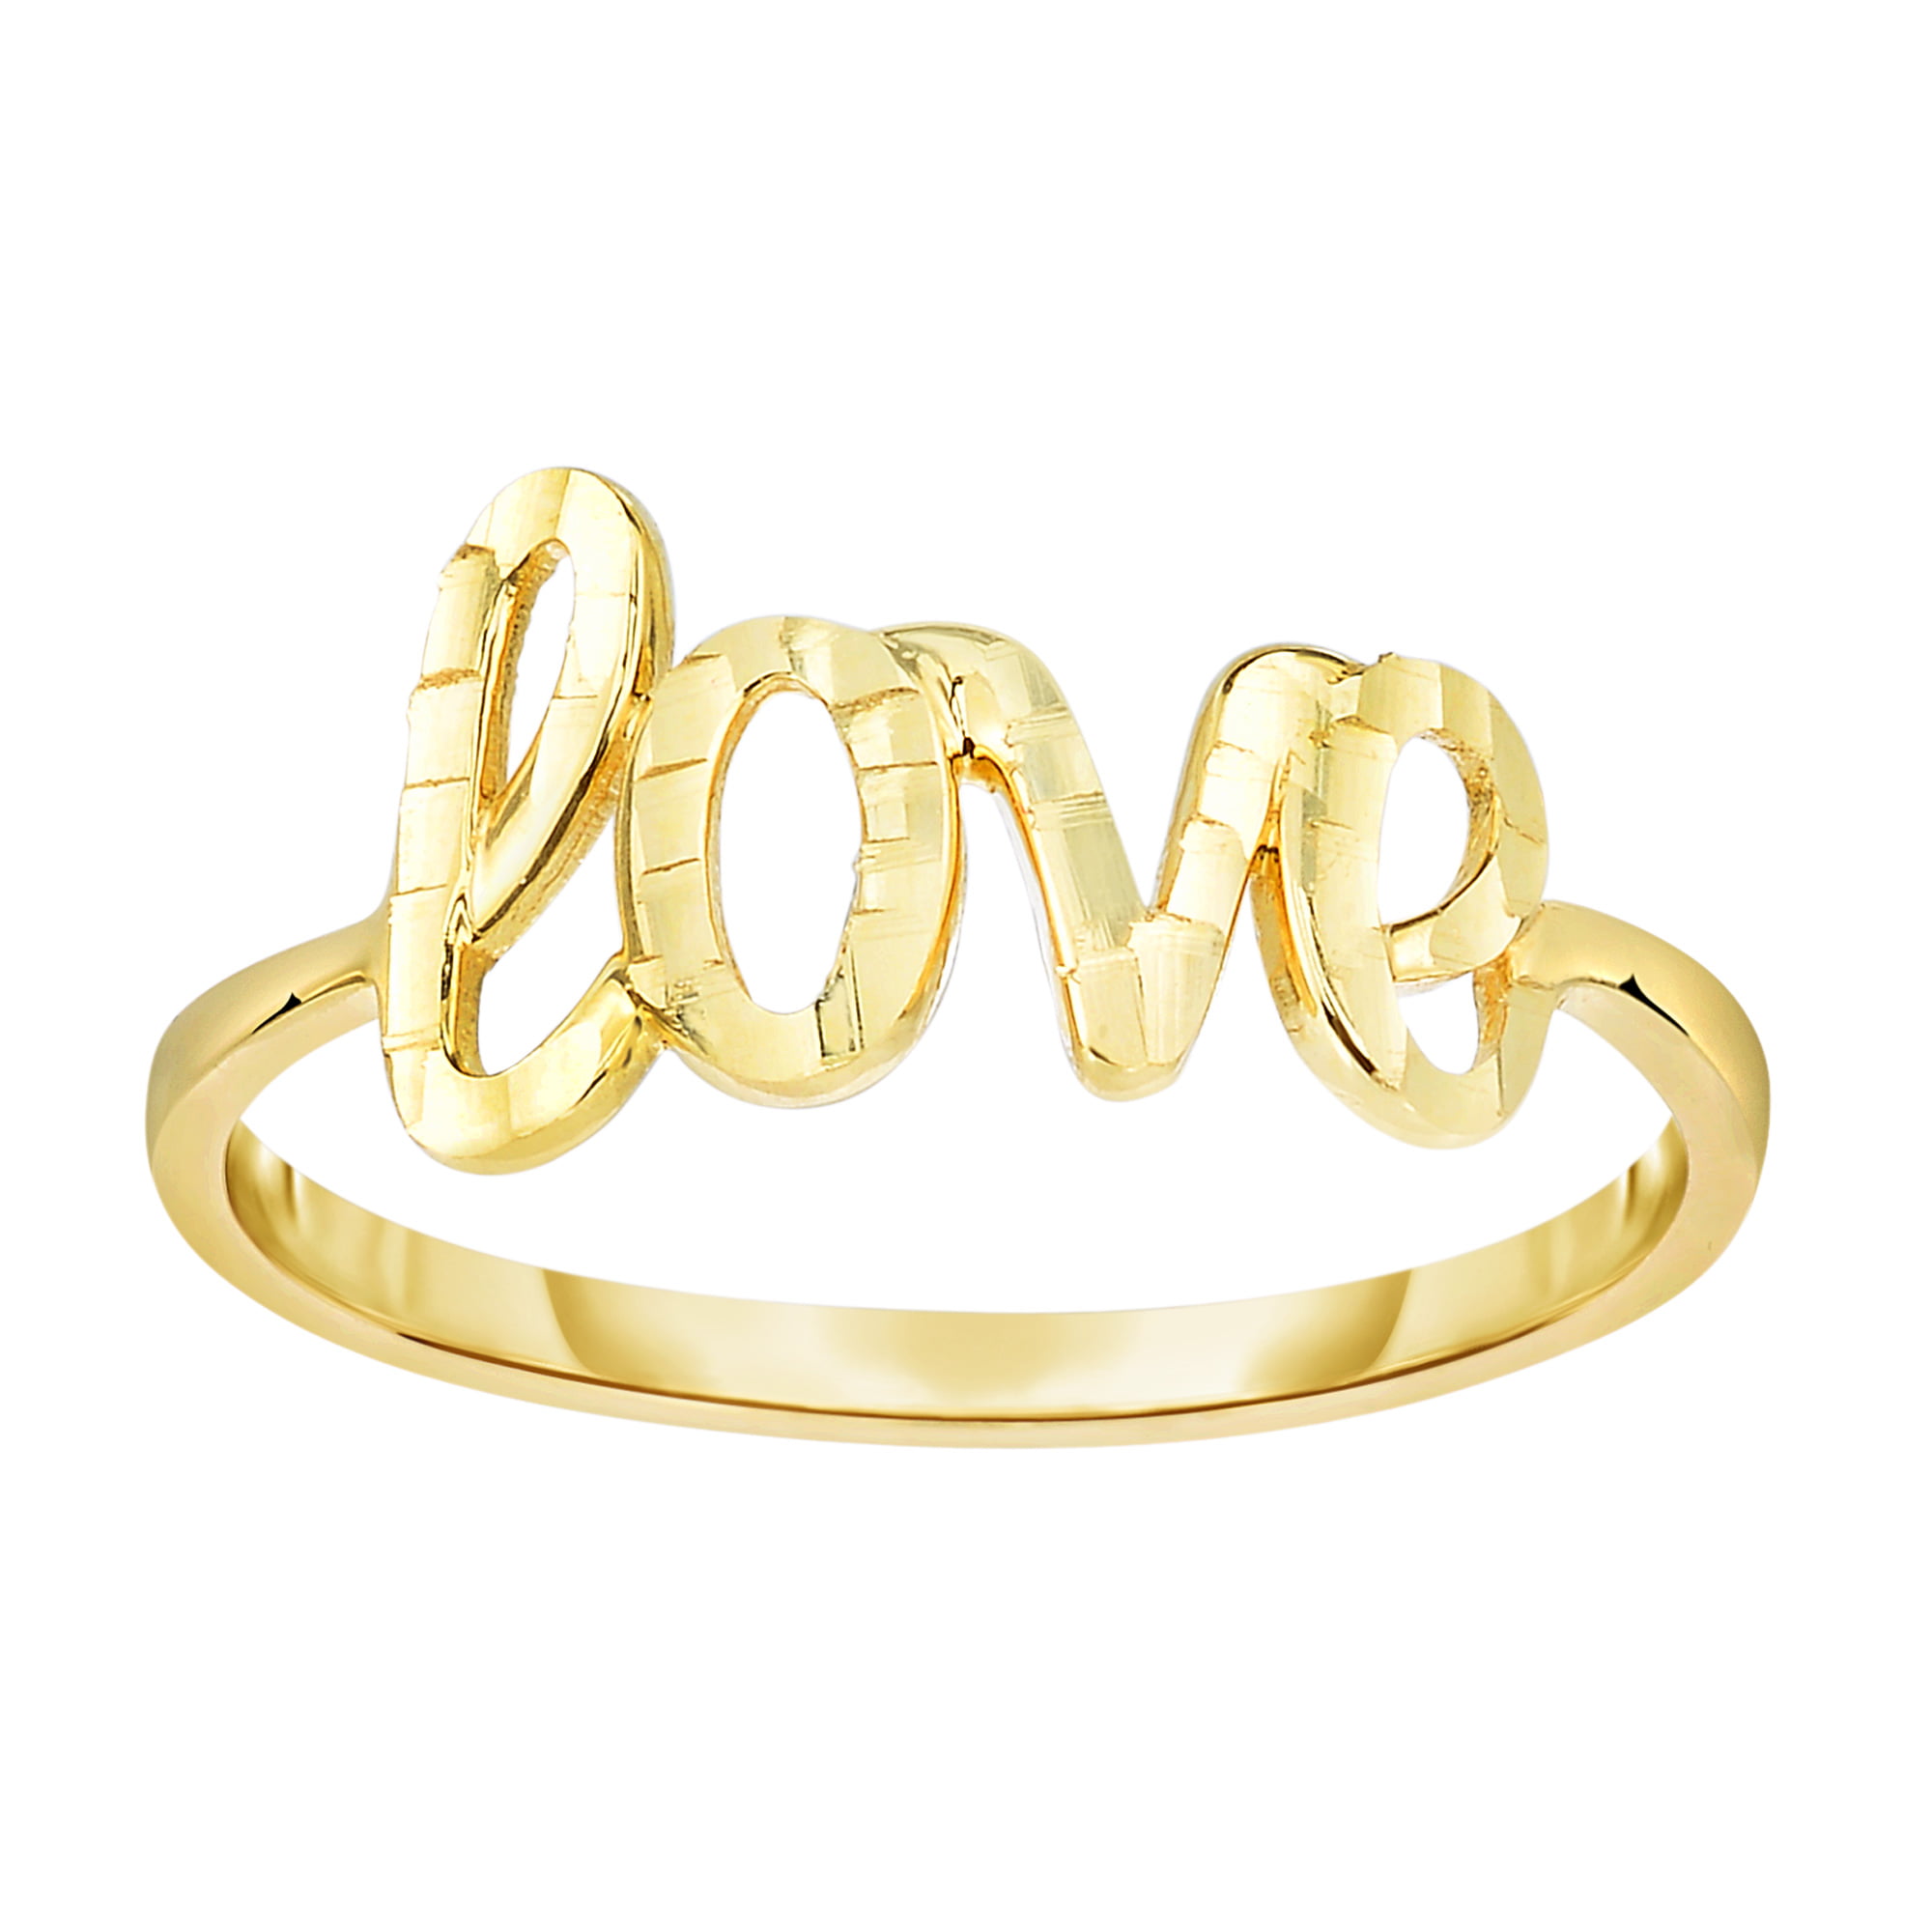 14K Yellow Gold Diamond Cut Love Ring, Size 7 | Walmart Canada